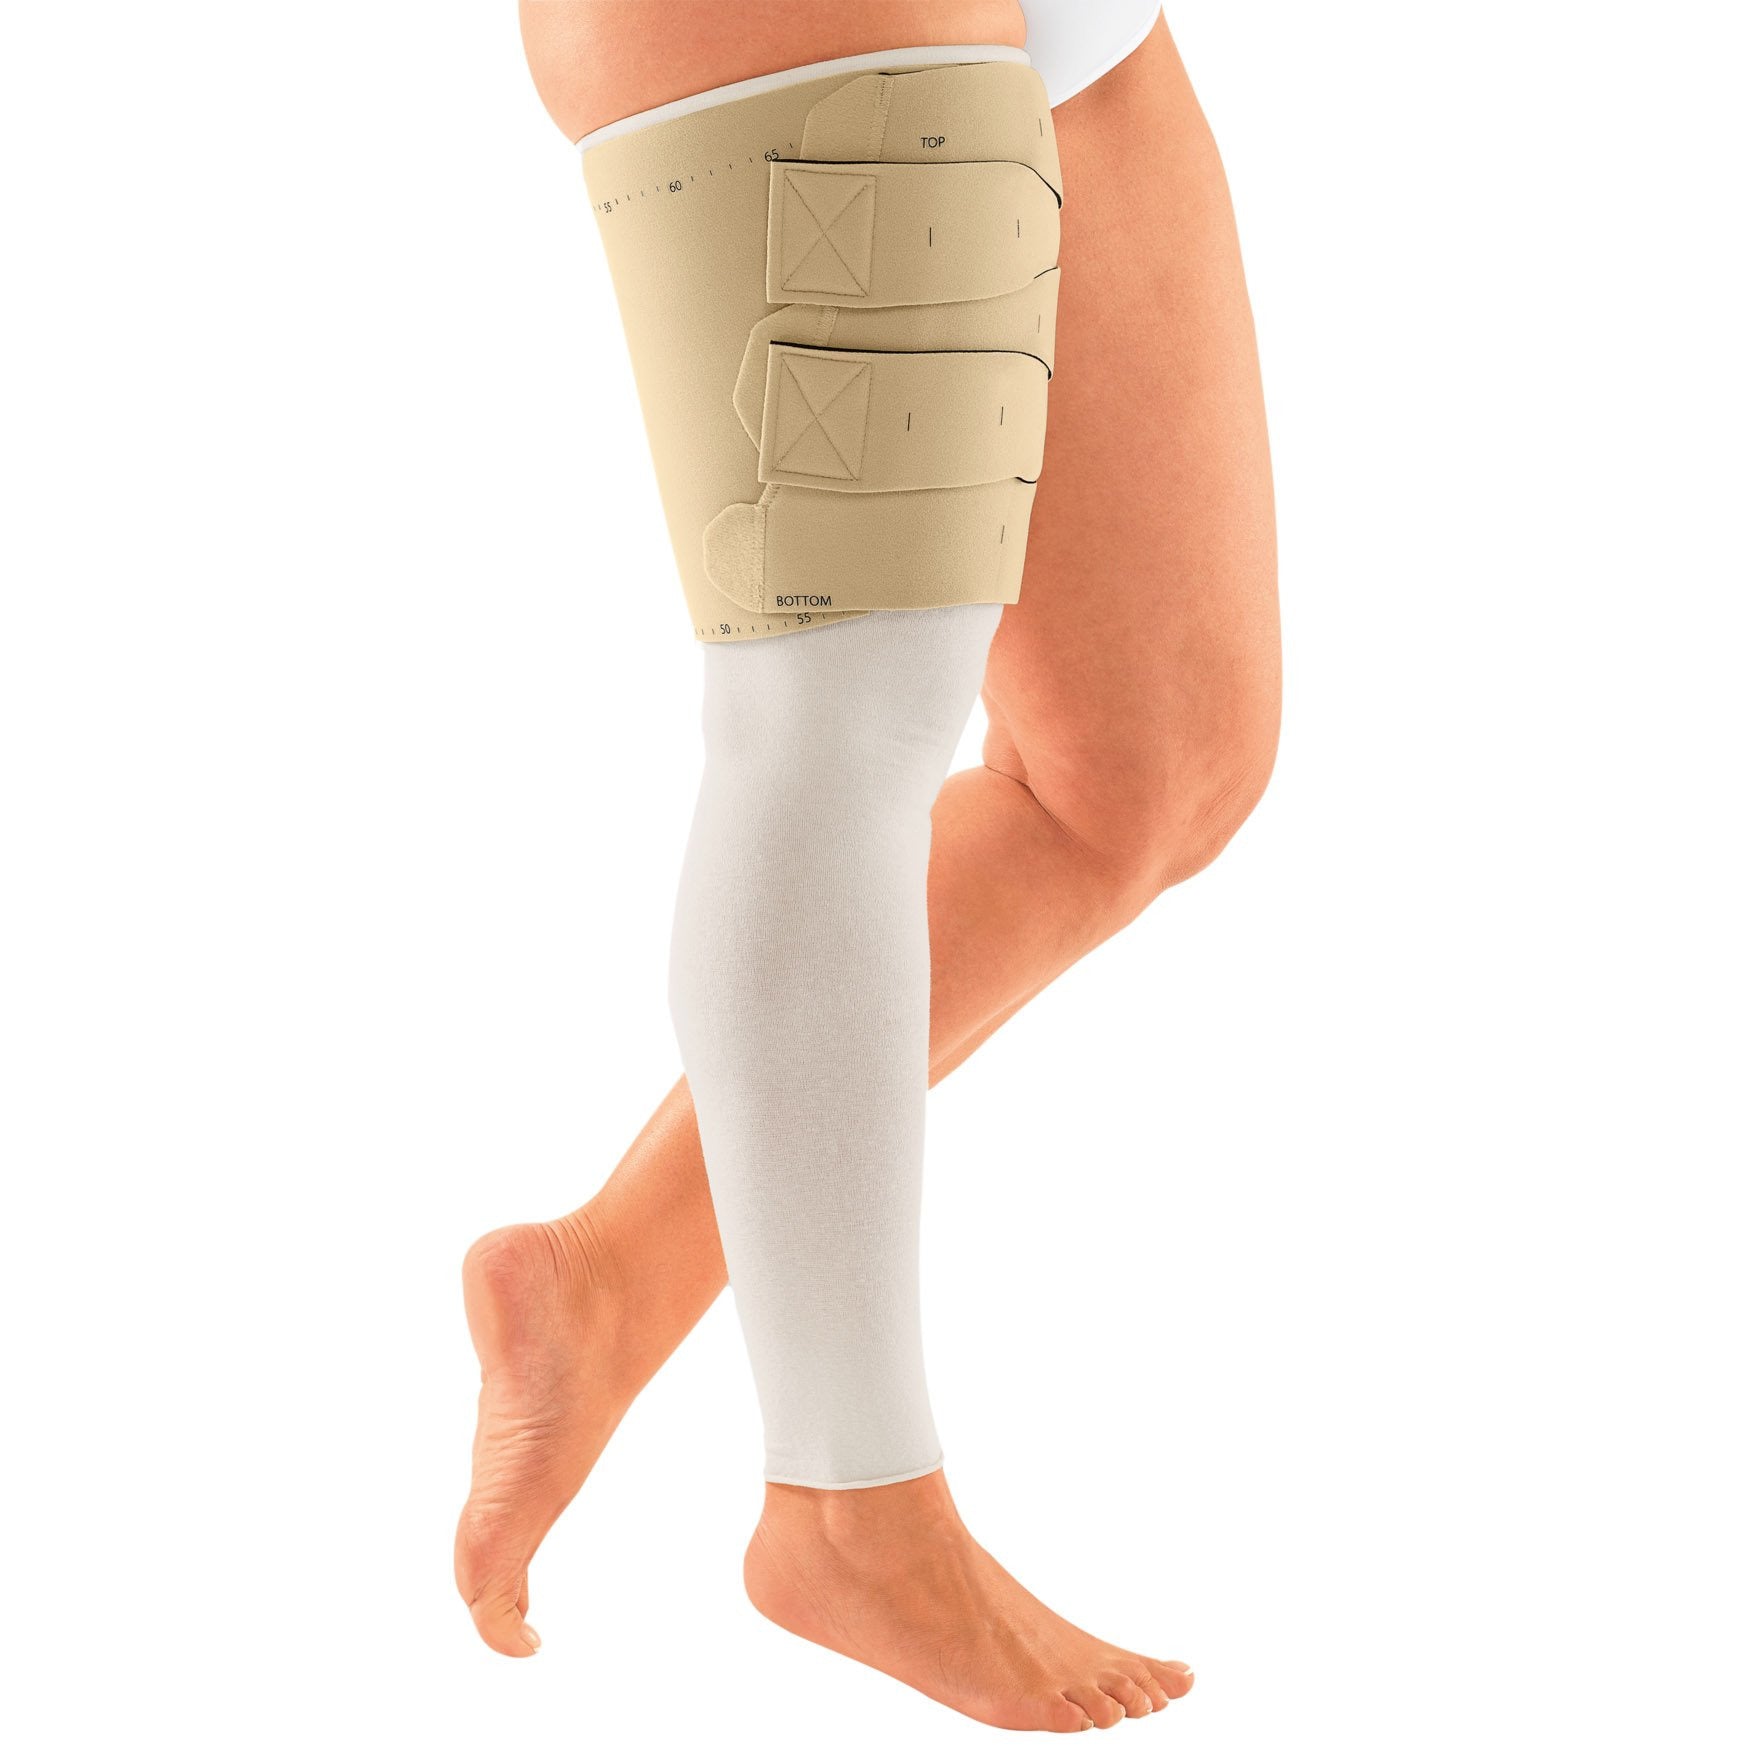 Circaid Upper Leg Reduction Kit